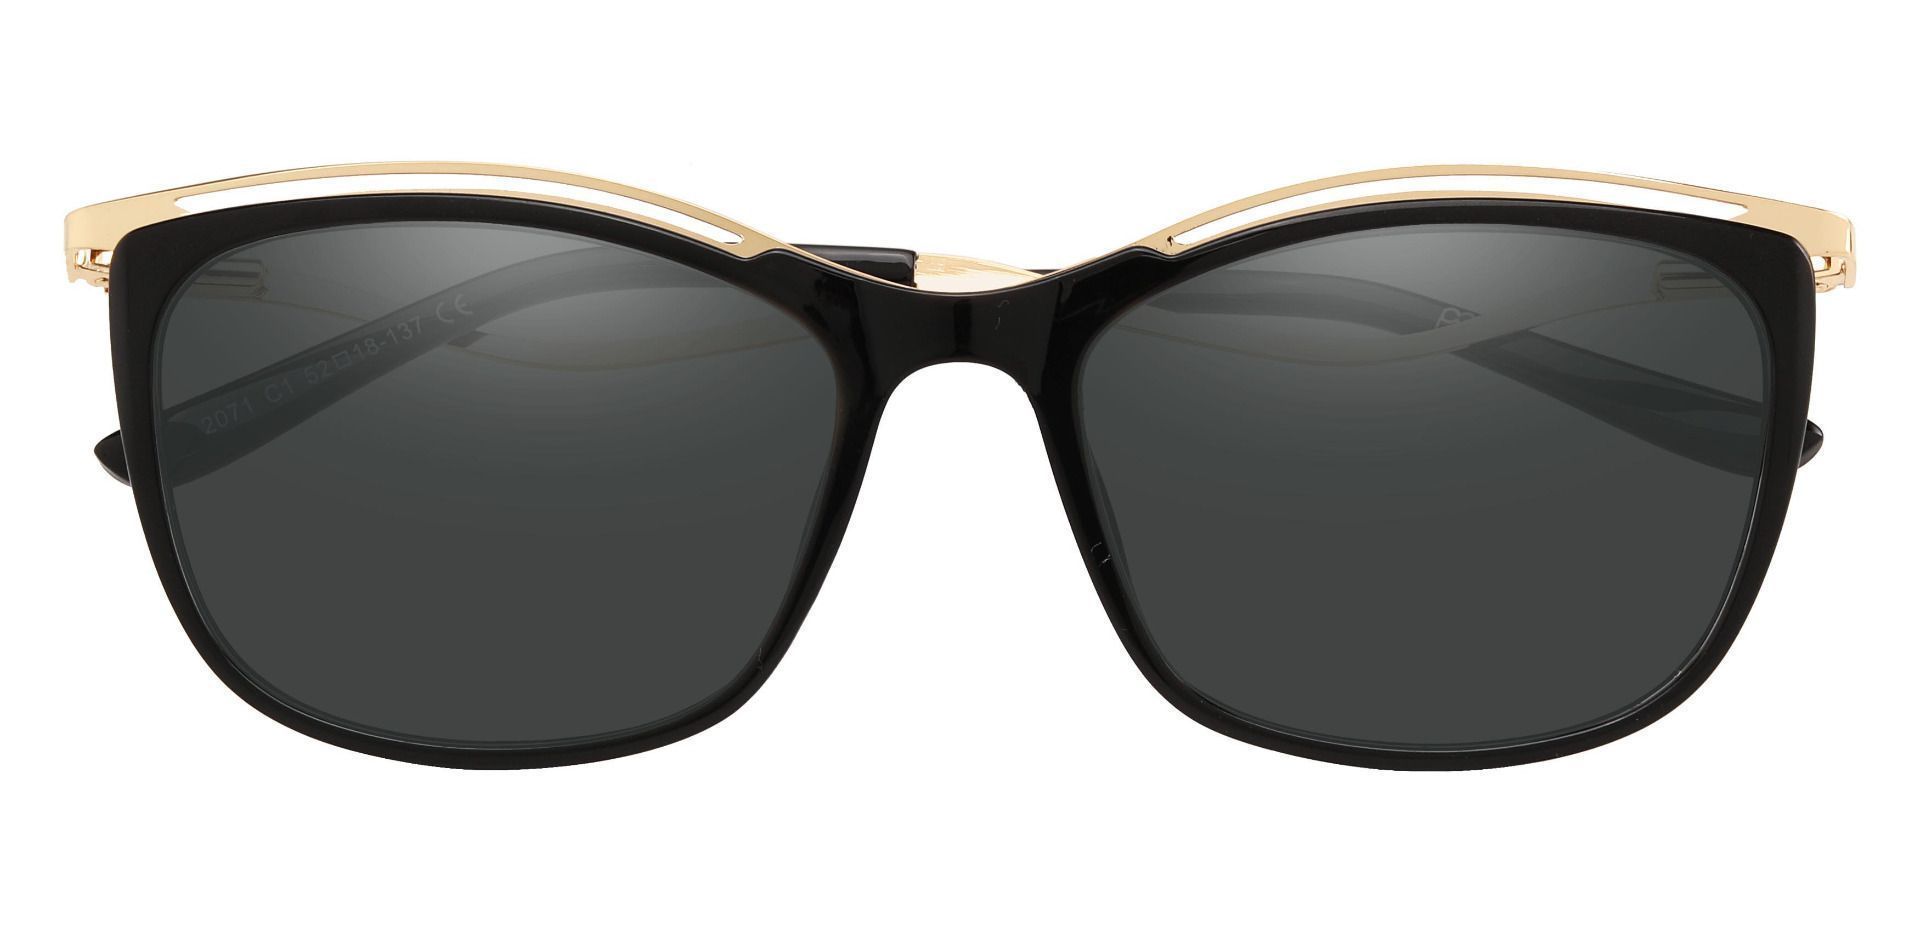 Enola Cat Eye Non-Rx Sunglasses - Black Frame With Gray Lenses